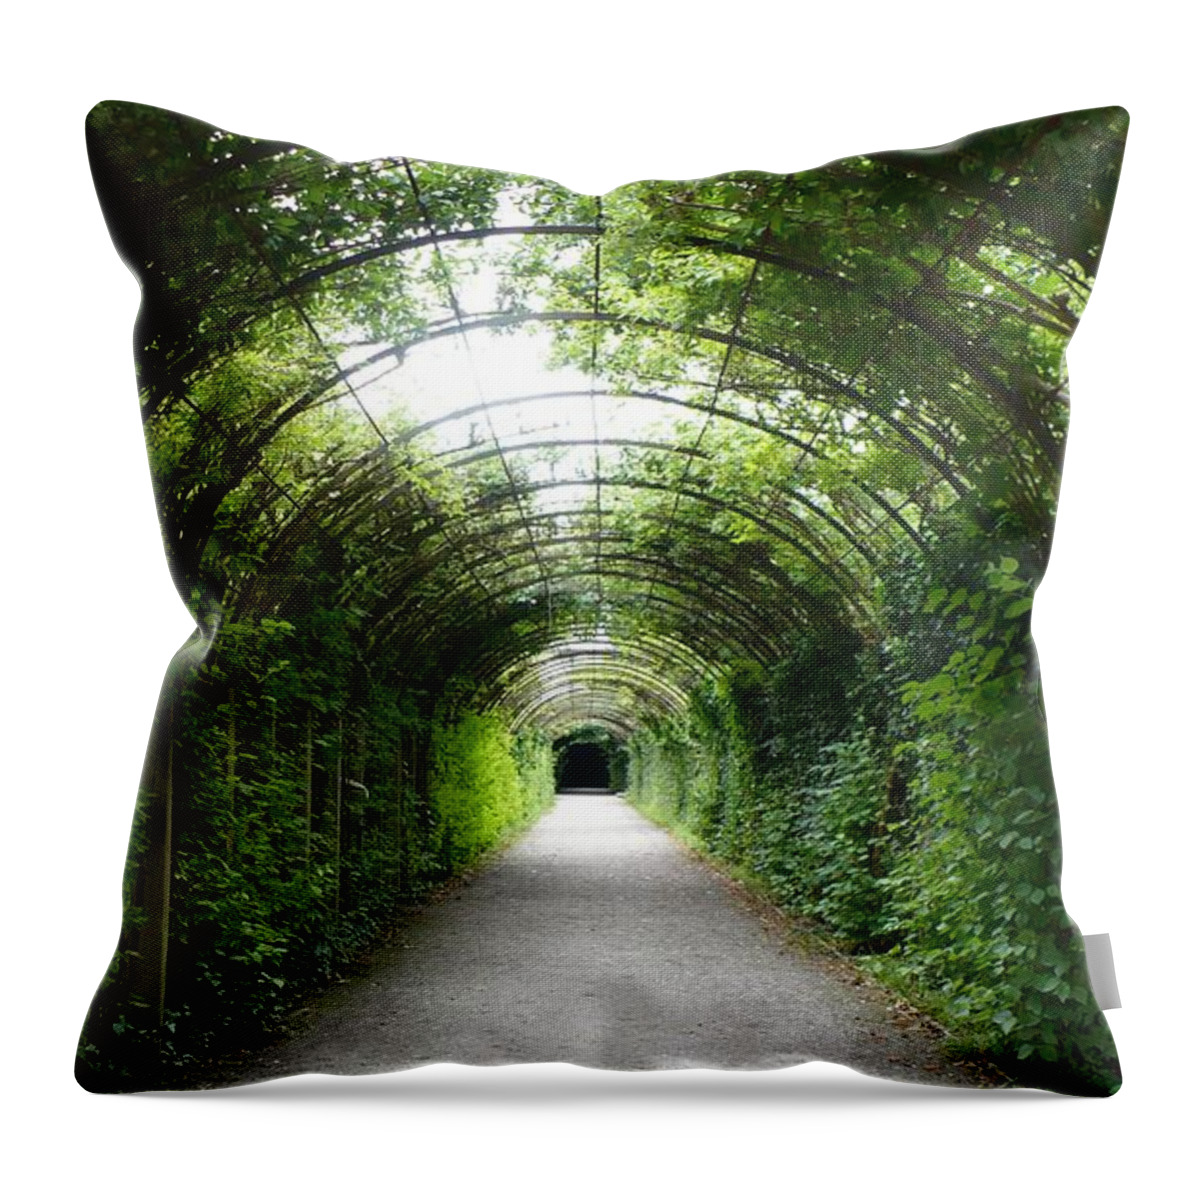 Europe Throw Pillow featuring the photograph Salzburg Garden Arbor by Carol Groenen